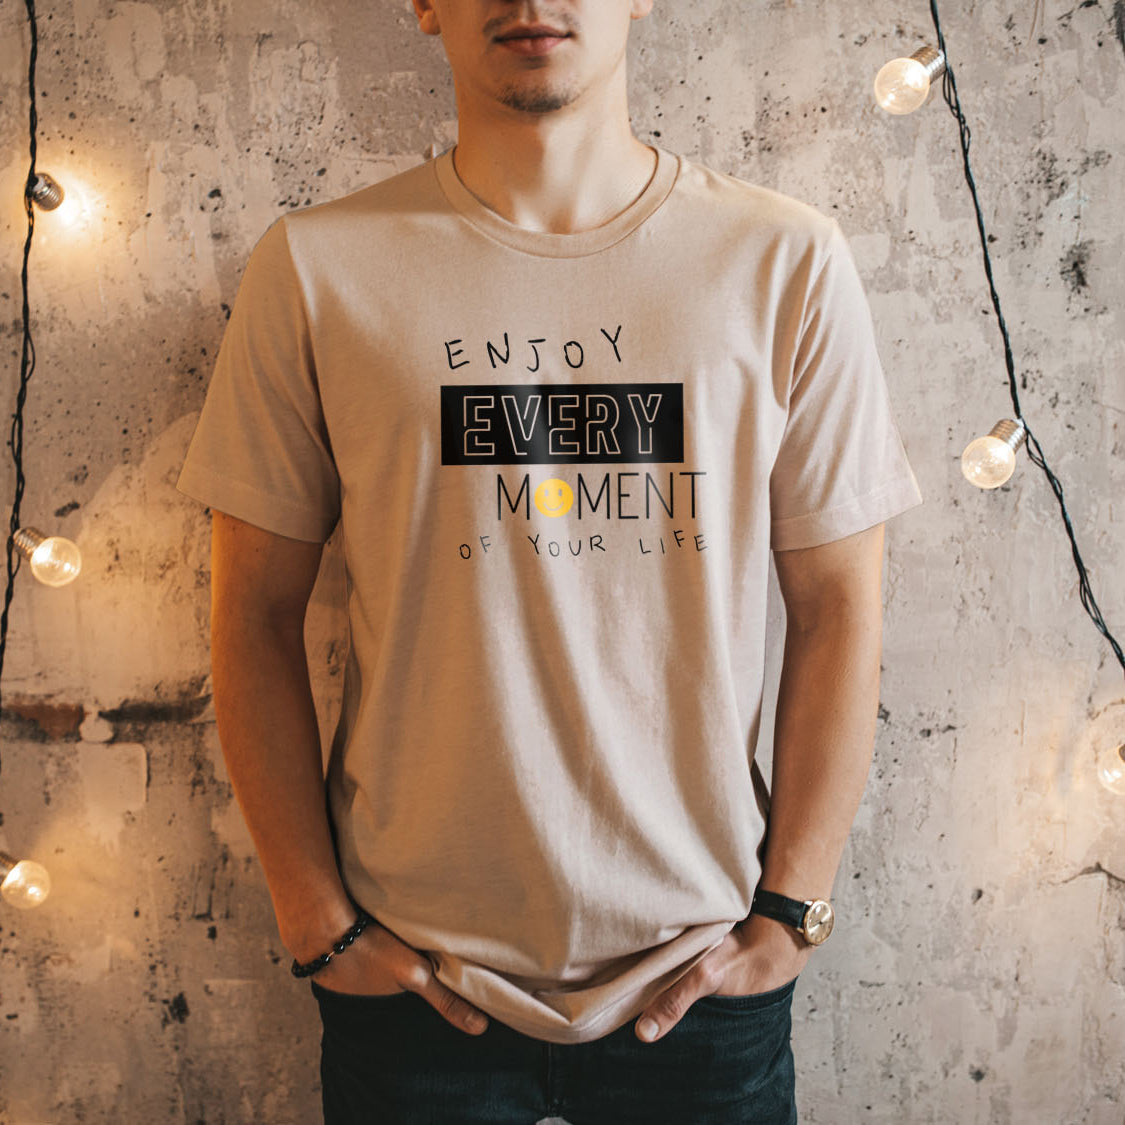 Enjoy Every Moment Of Your Life T-shirt - Fun Relax Motivation Inspiring Design Printed Tee Shirt